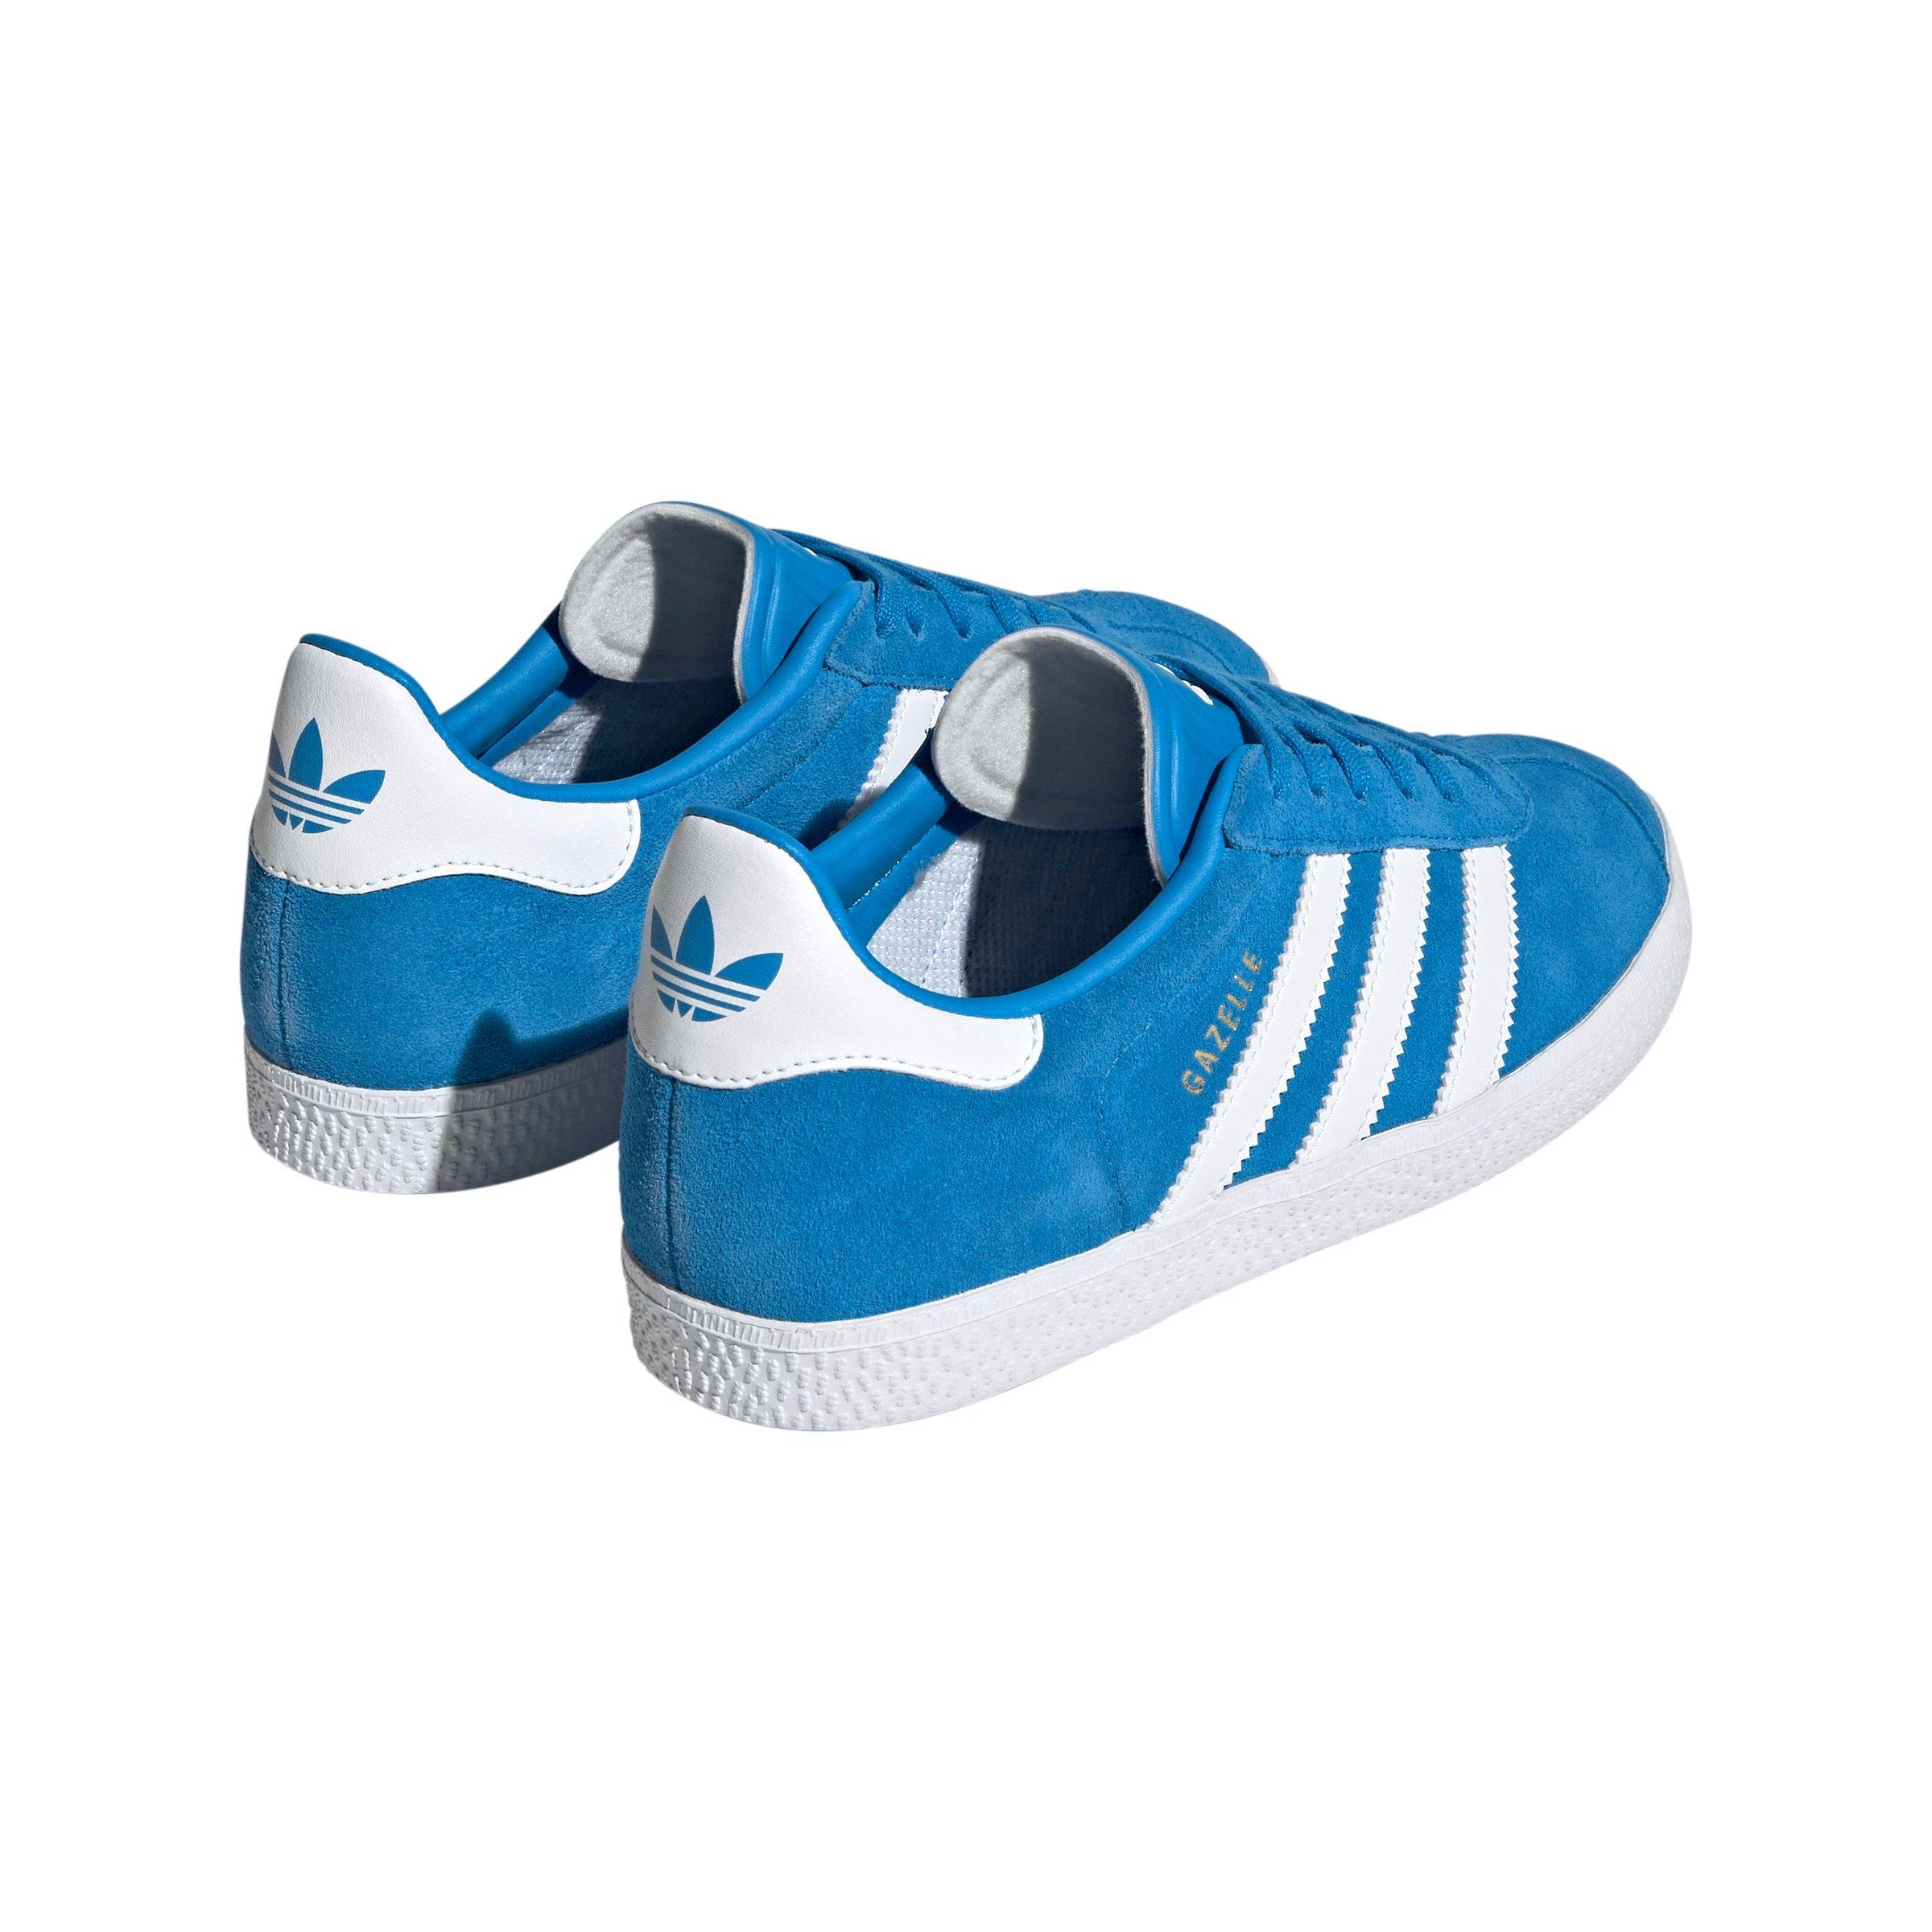 Adidas Gazelle shoes size 5 male blue/ light blue (J1)